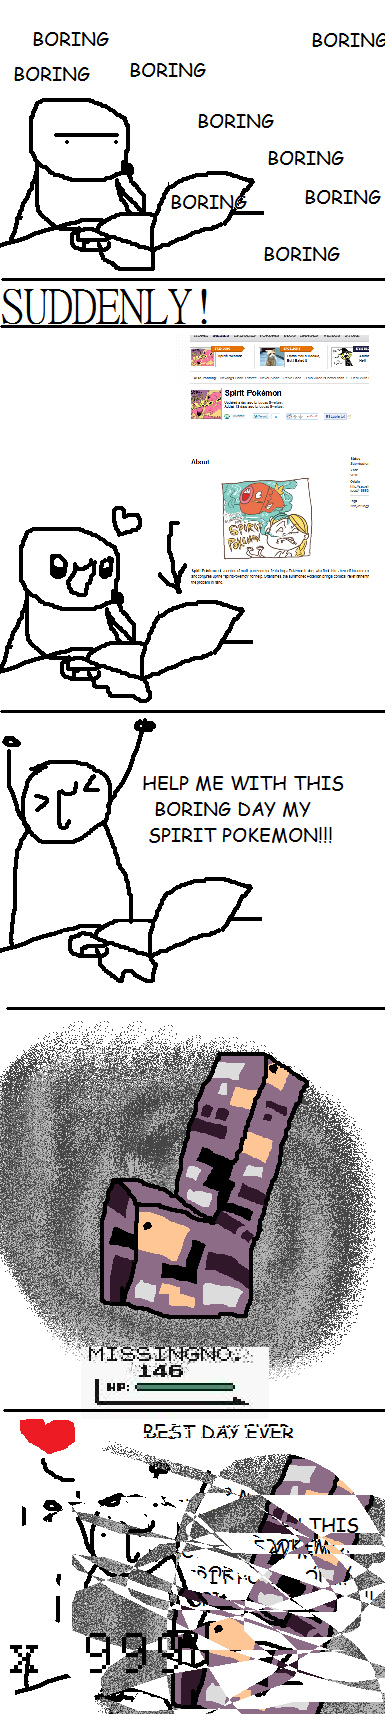 my_spirit_pokemon_by_lordofdragonss-d36epip.png